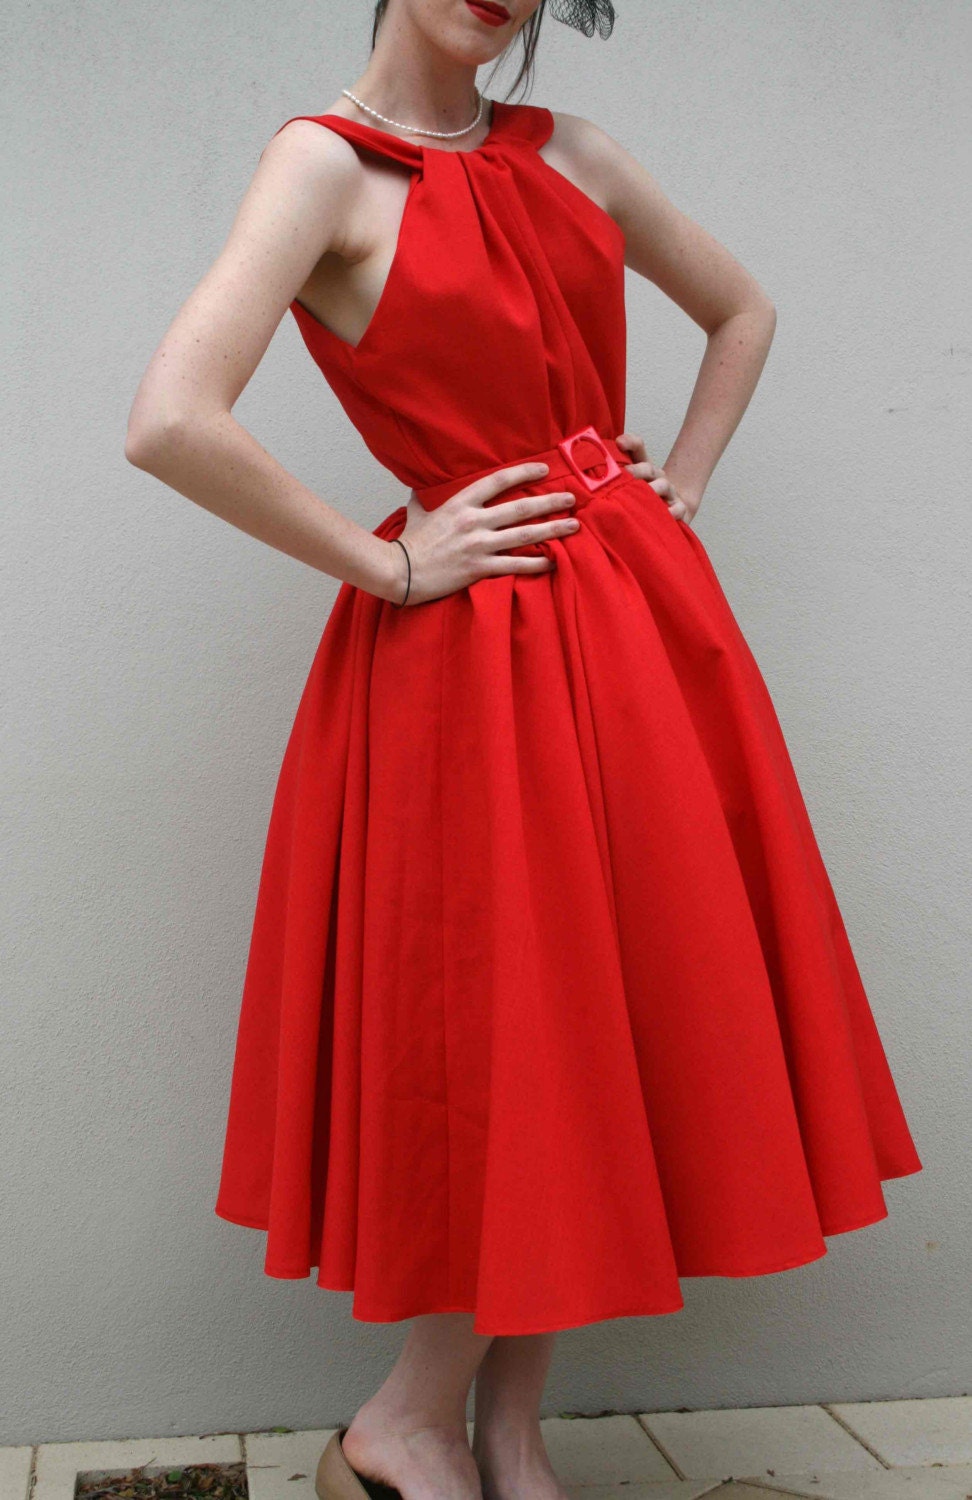 GORGEOUS handmade 1950s style RED BOMBSHELL DRESS